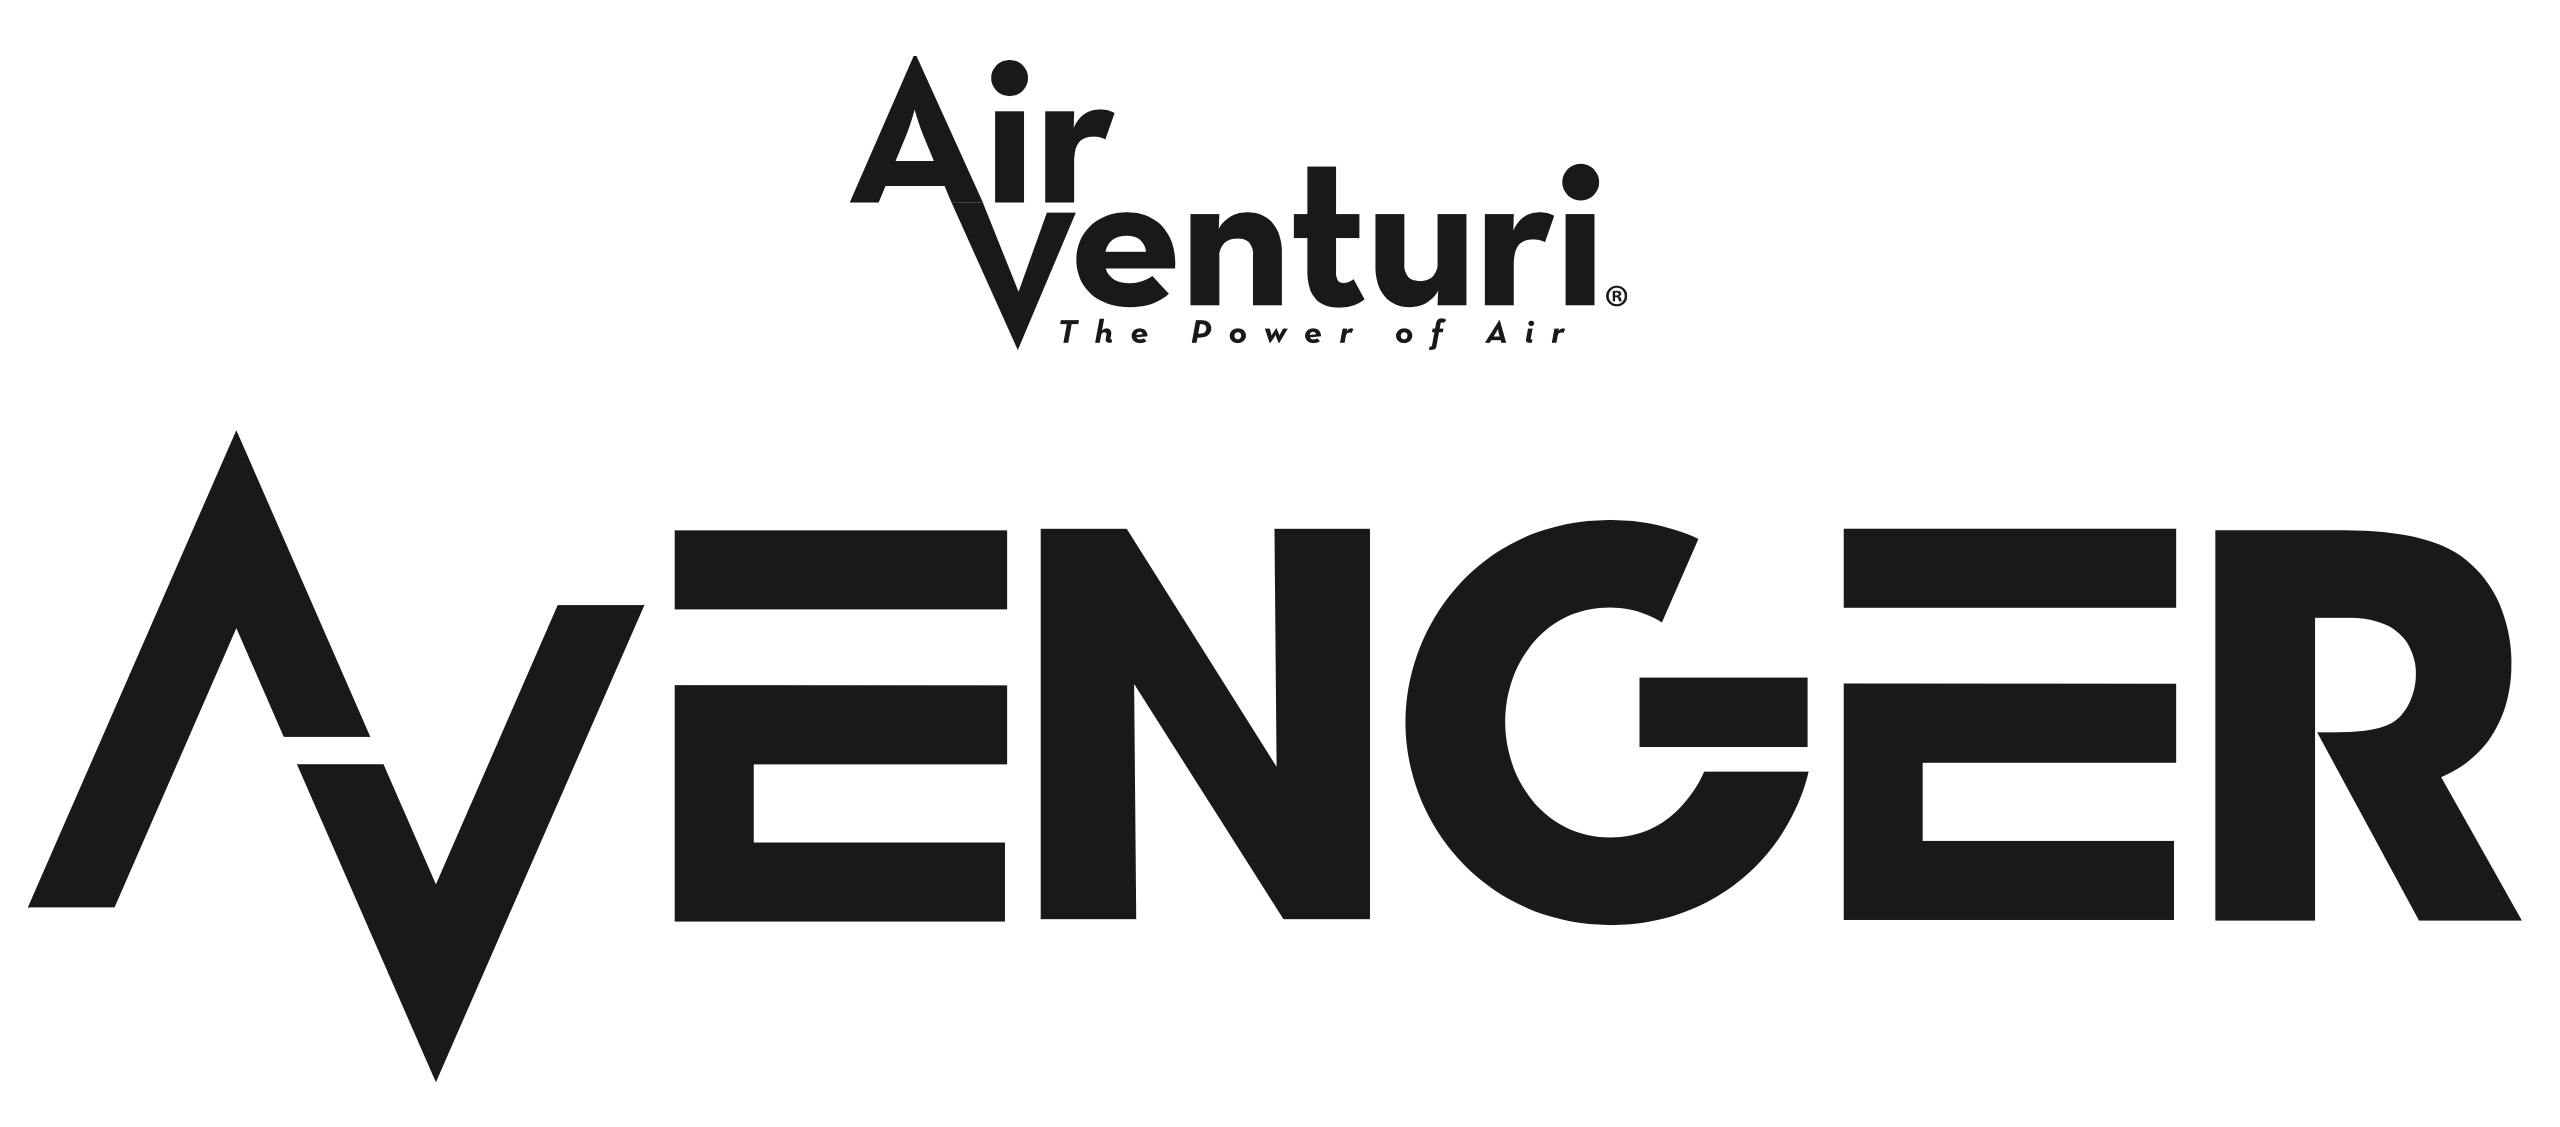 Air Venturi Avenger